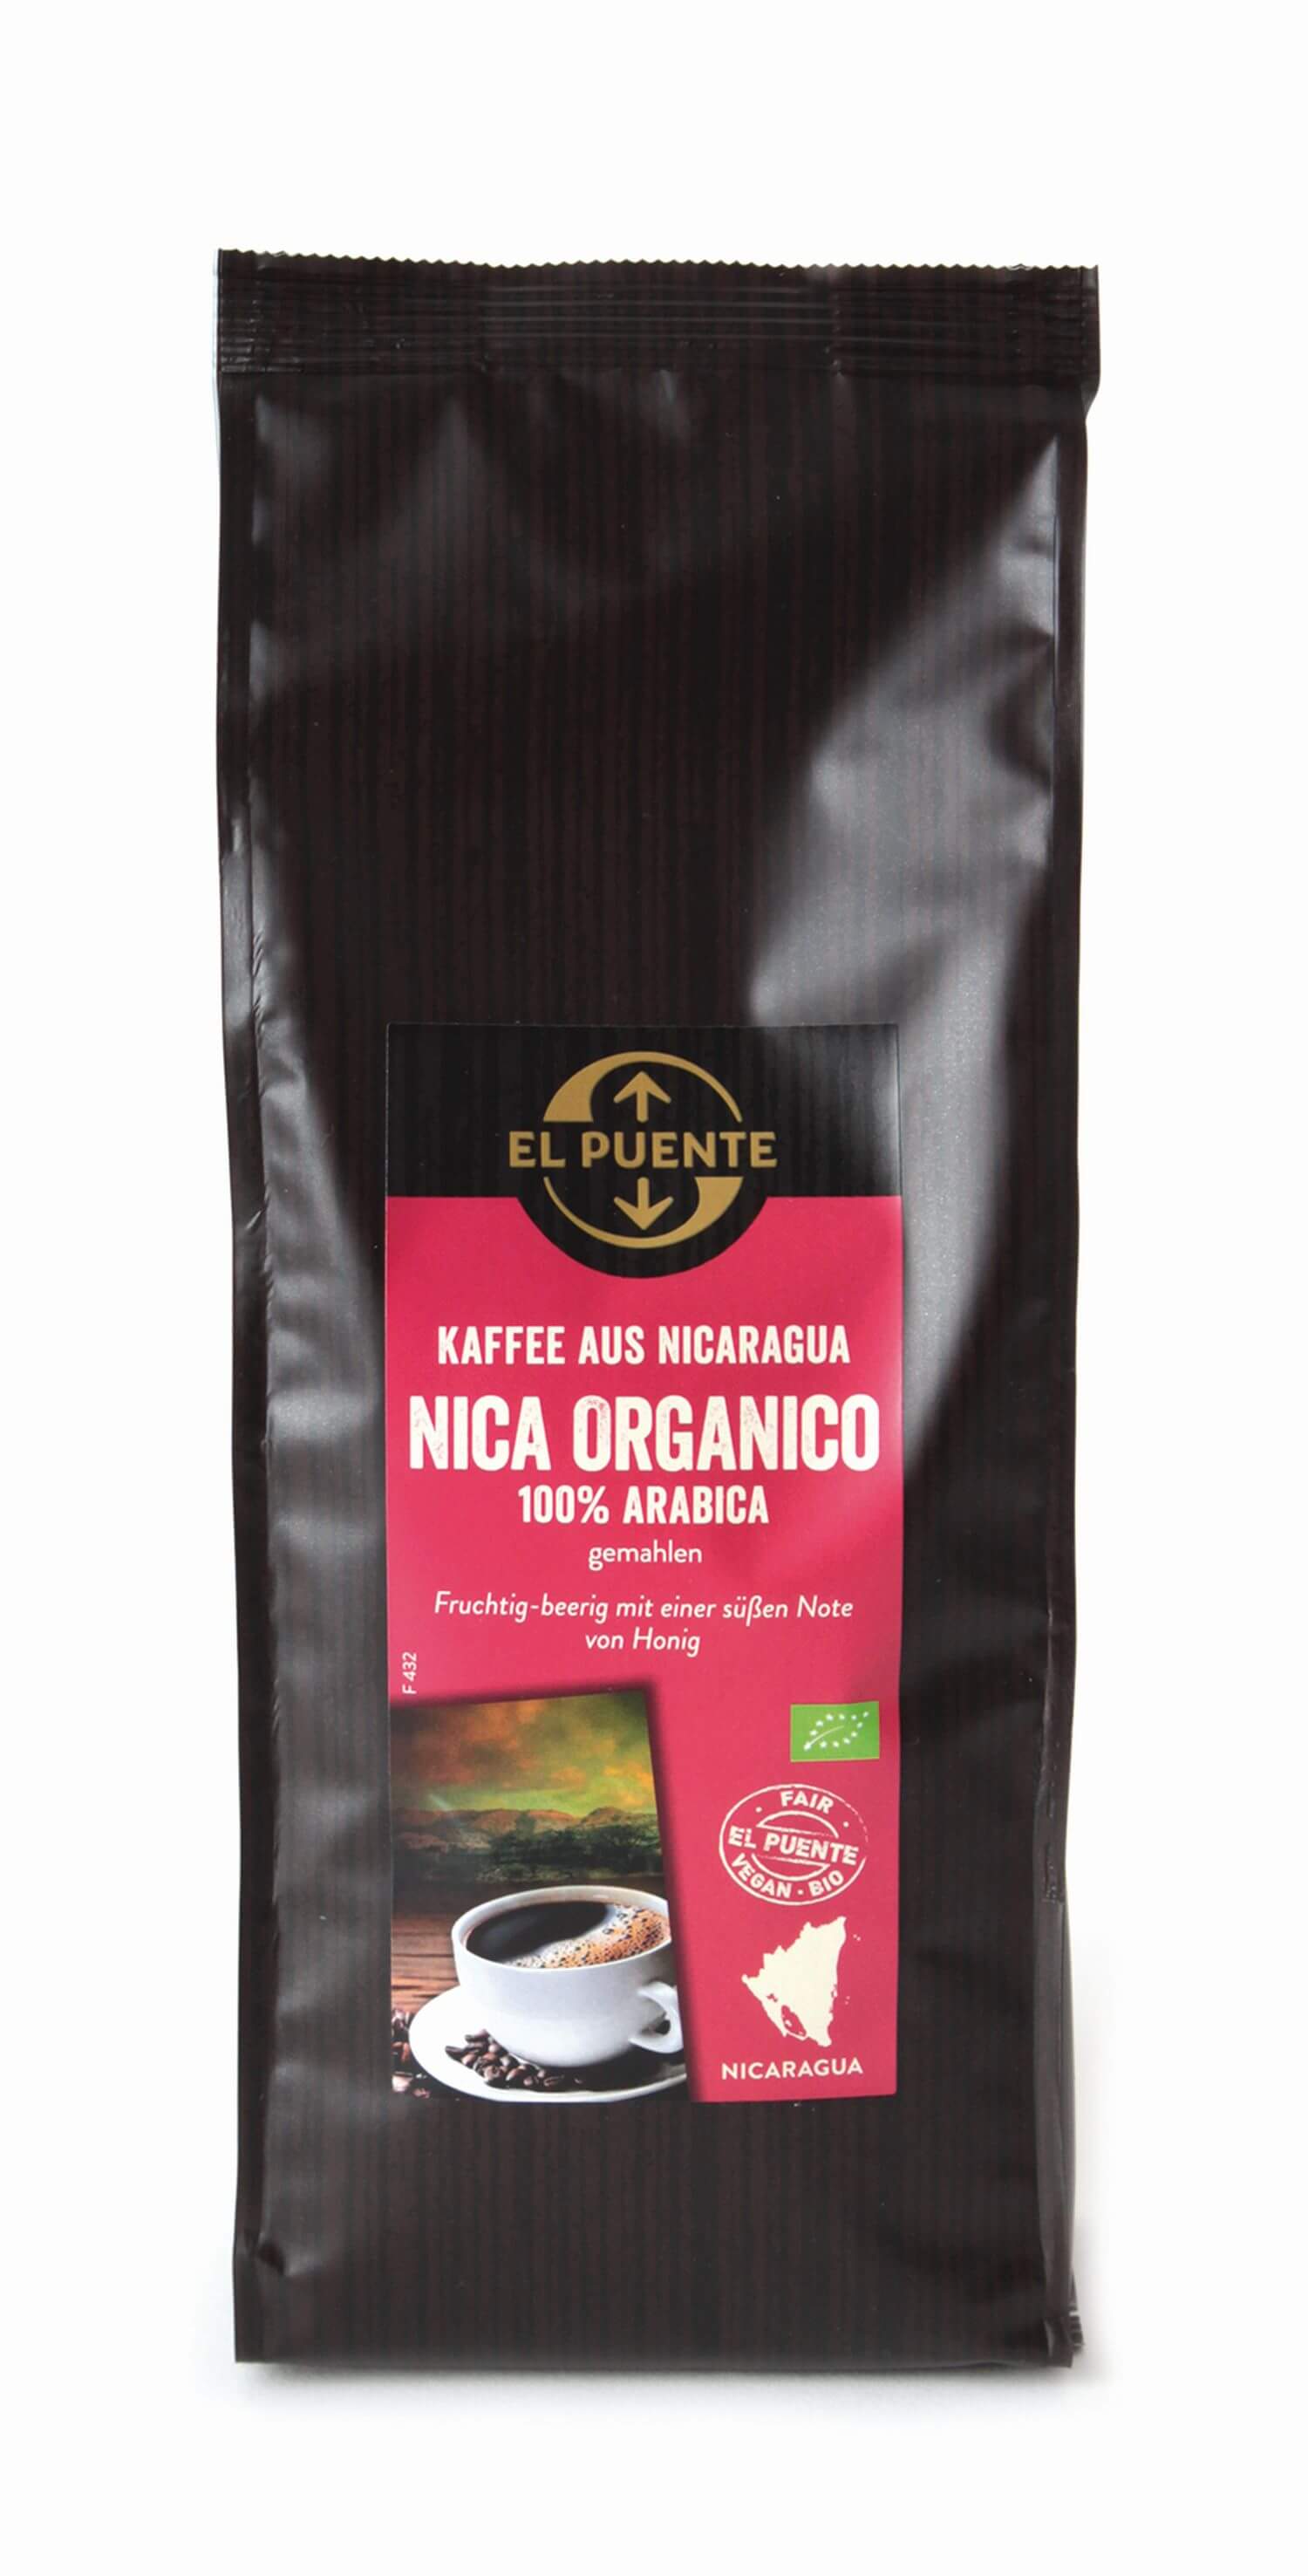 El Puente Nicaragua Kaffee ganze Bohne